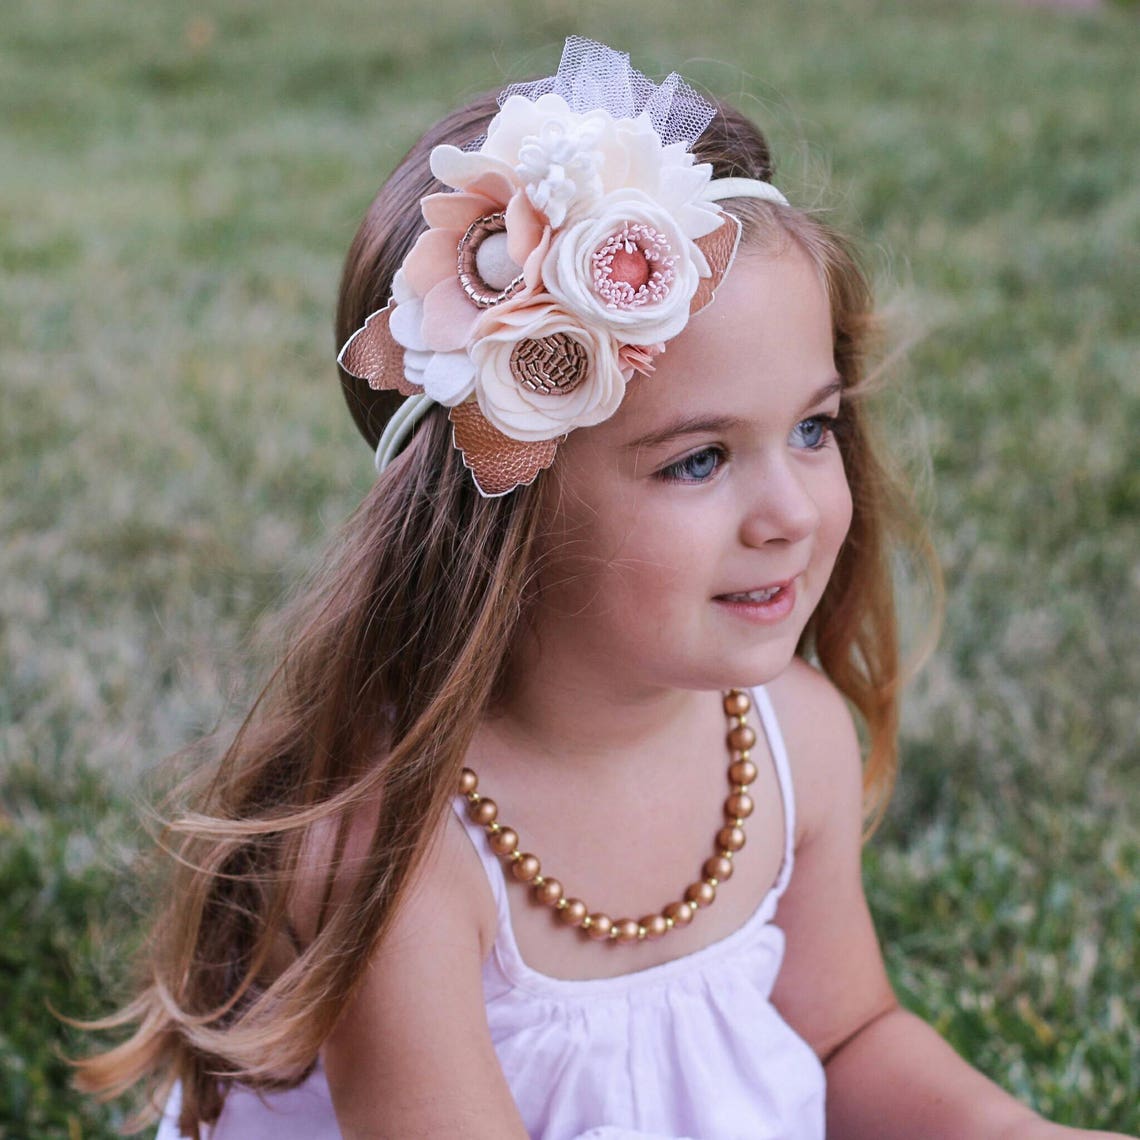 Aubrey /felt flower crown /felt flower headband /christening | Etsy